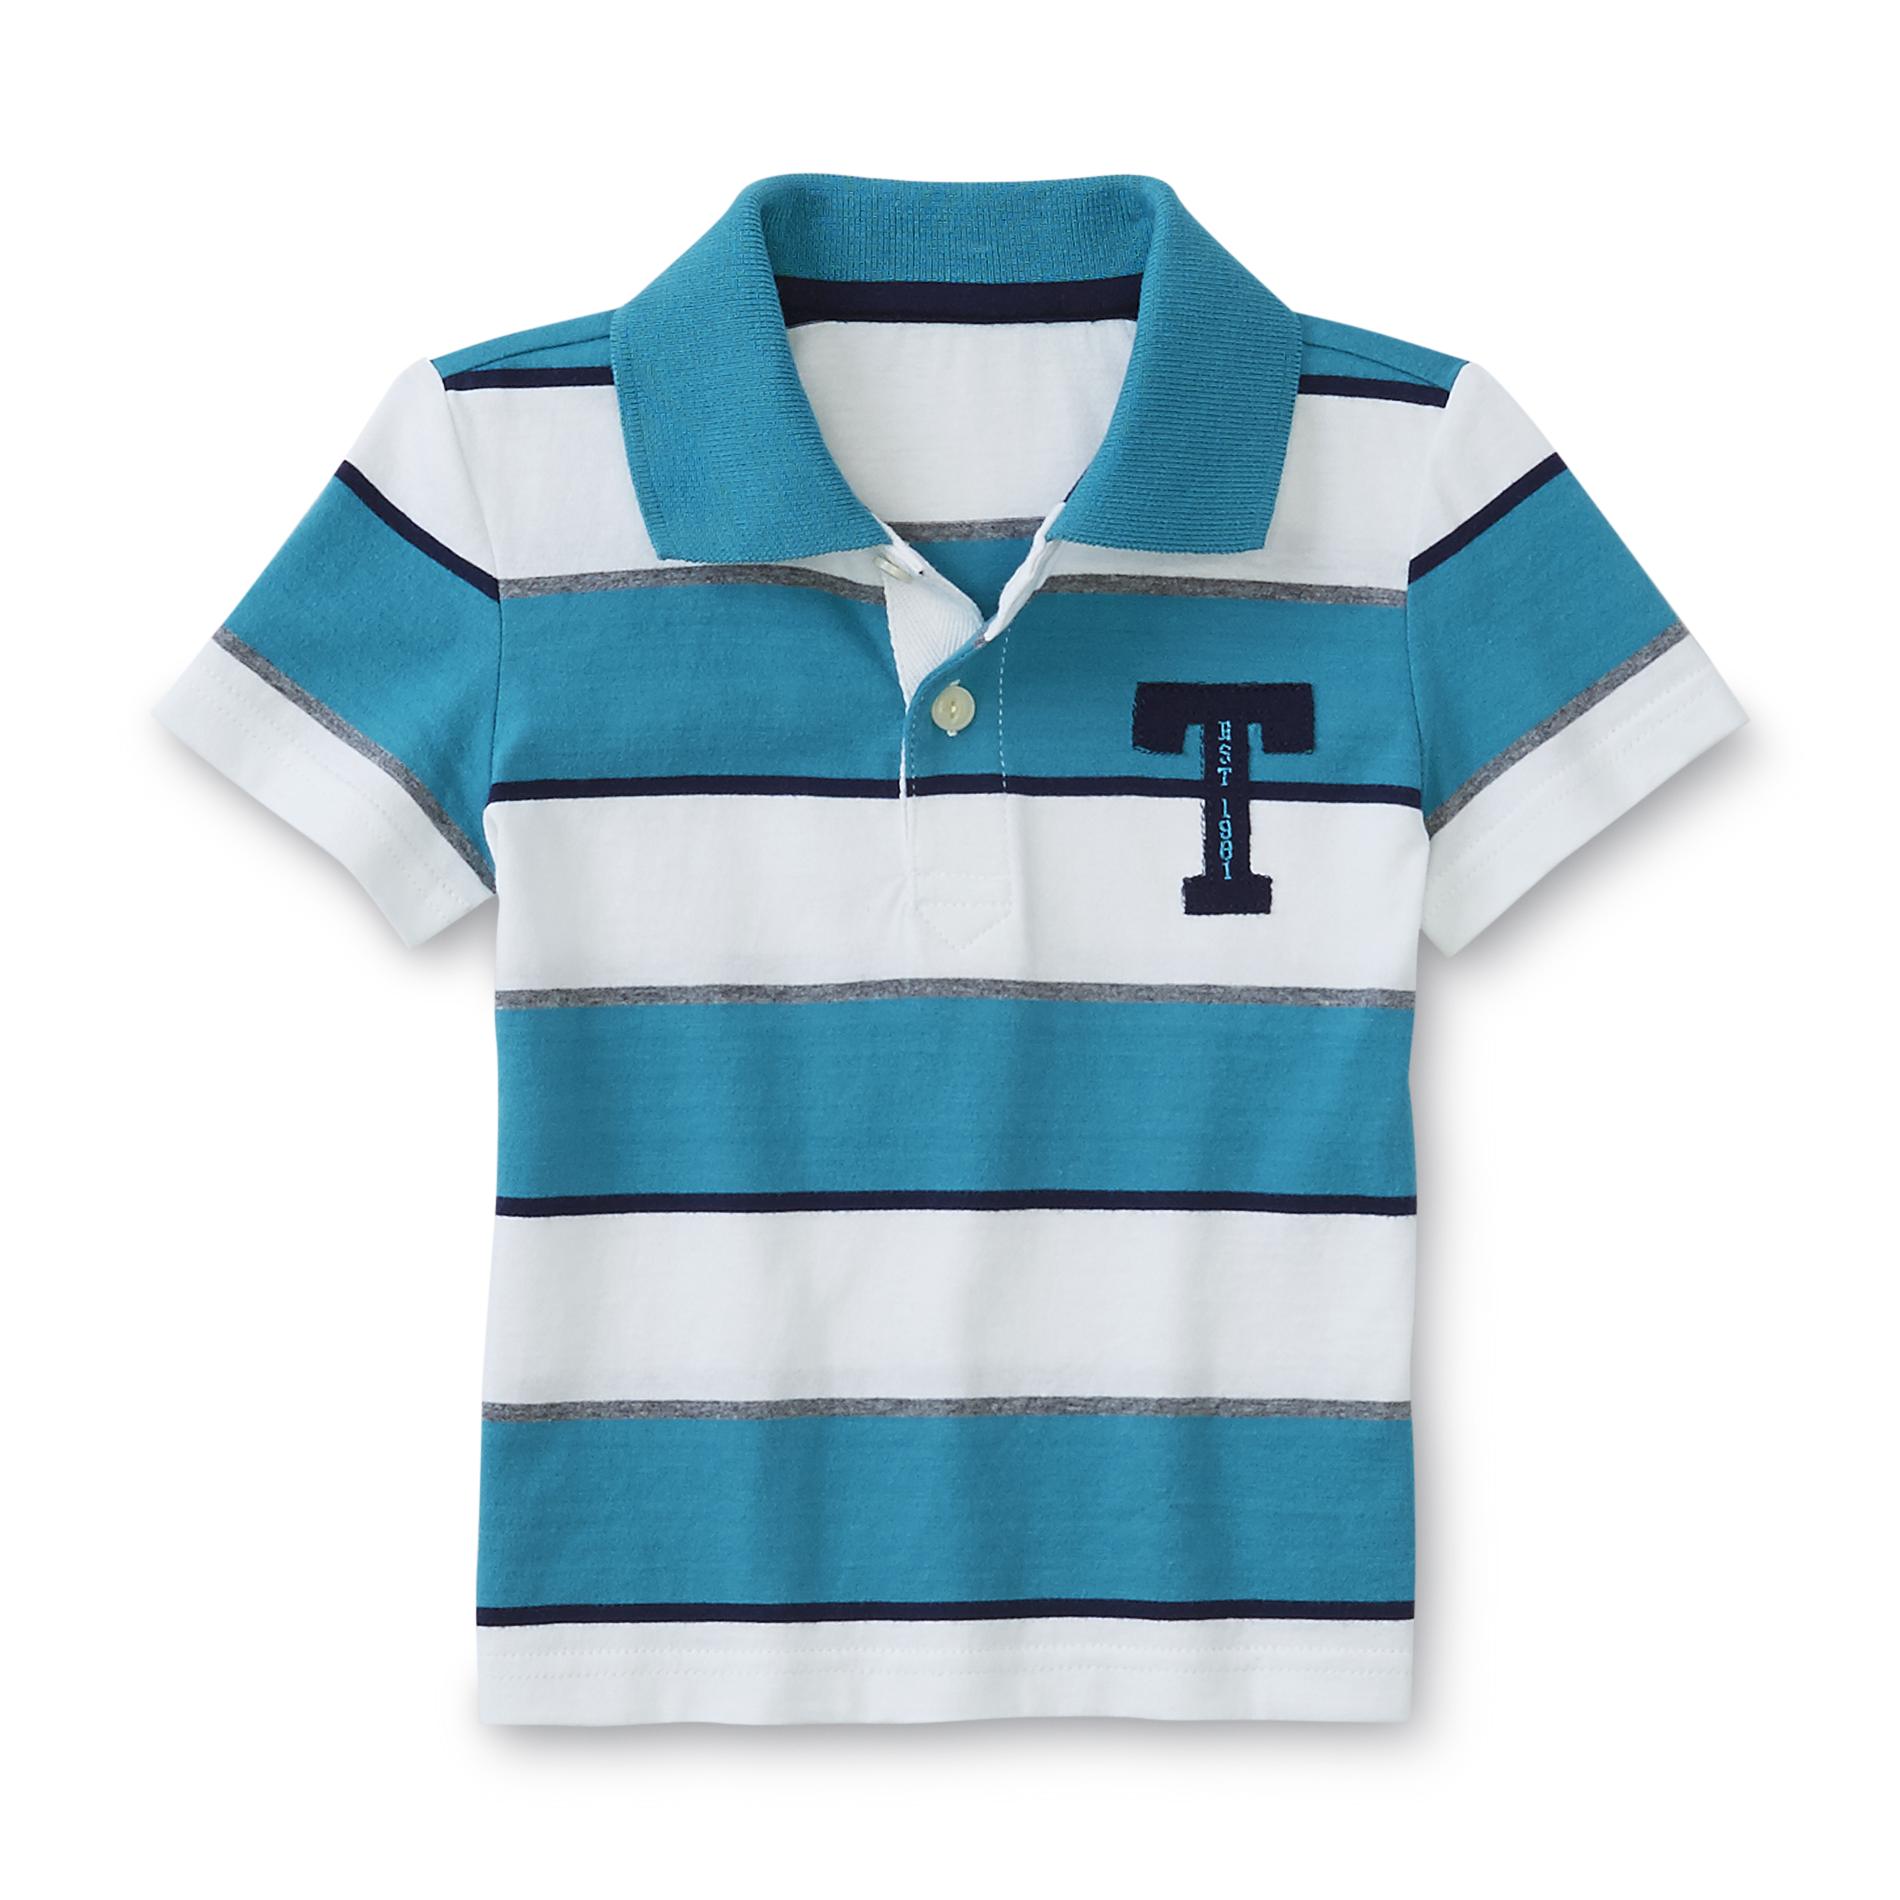 Toughskins Infant & Toddler Boy's Polo Shirt - Striped